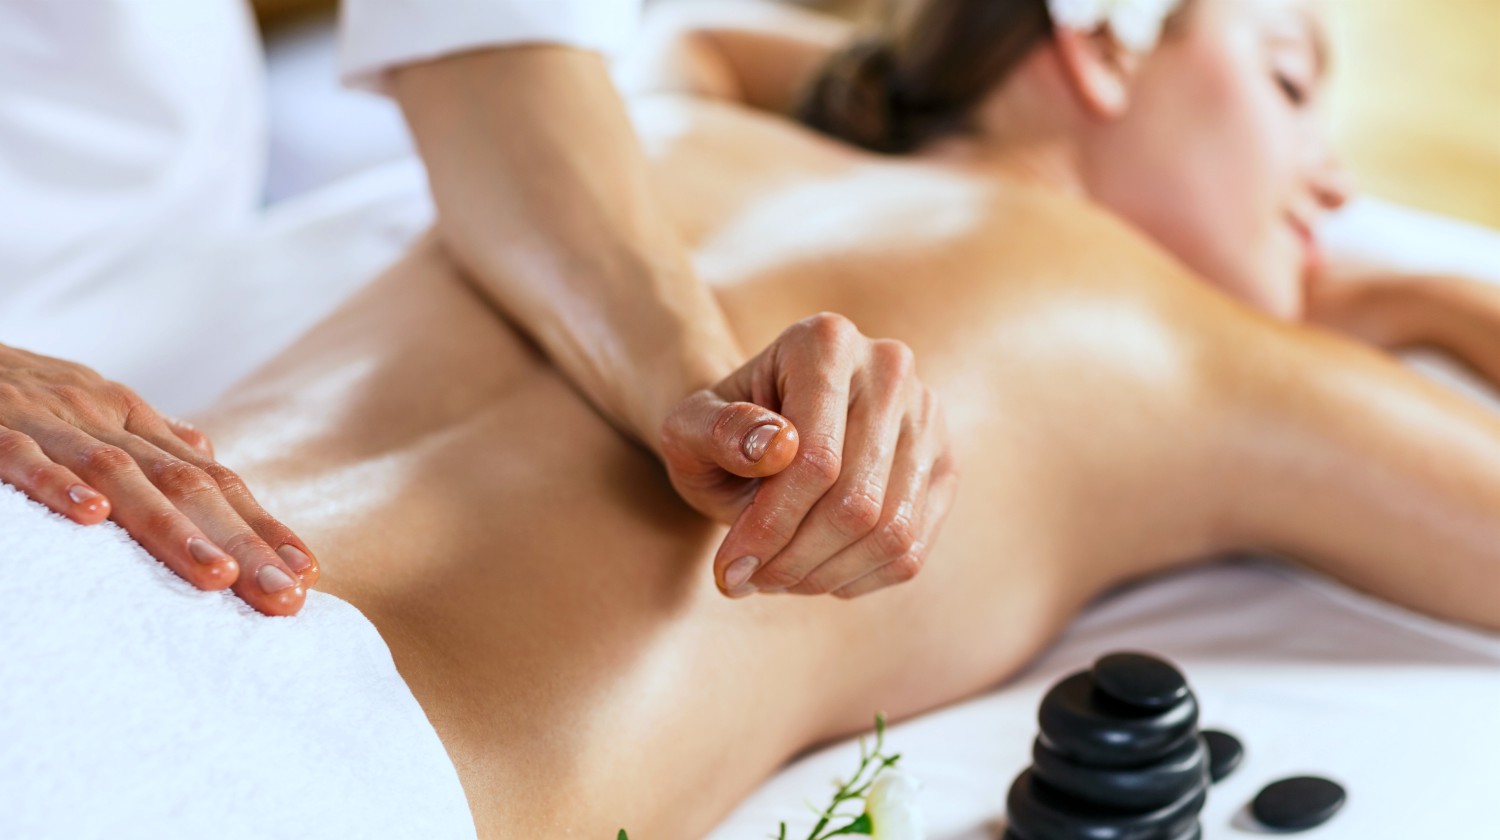 woman enjoying her back massage | Reasons Why You Deserve A Relaxing Massage | relaxing massage | relaxing back massage | Featured